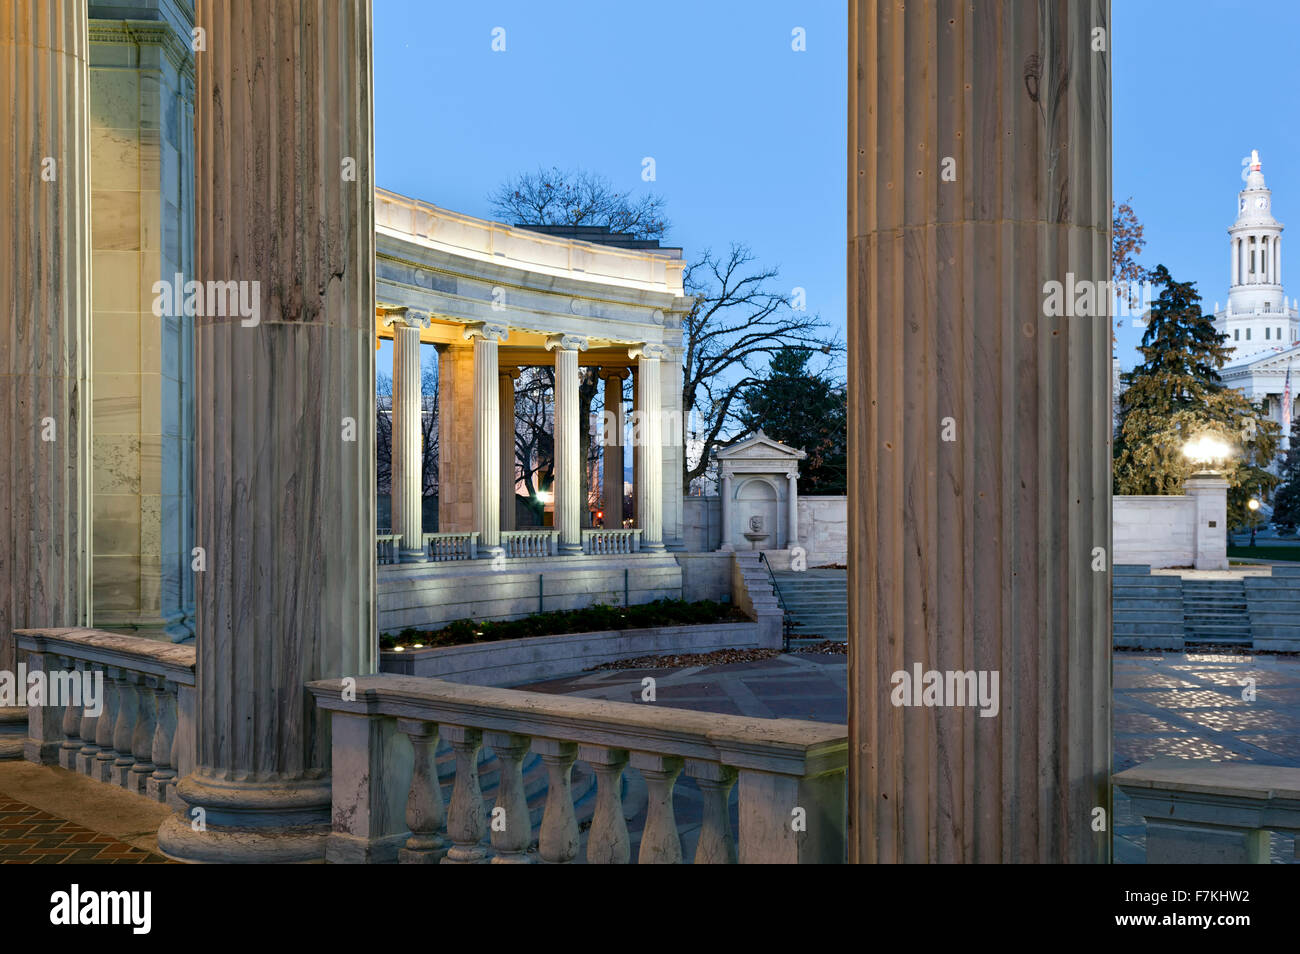 Columns, Greek Amphitheater (City & County Building in background), Civic Center Park, Denver, Colorado USA Stock Photo